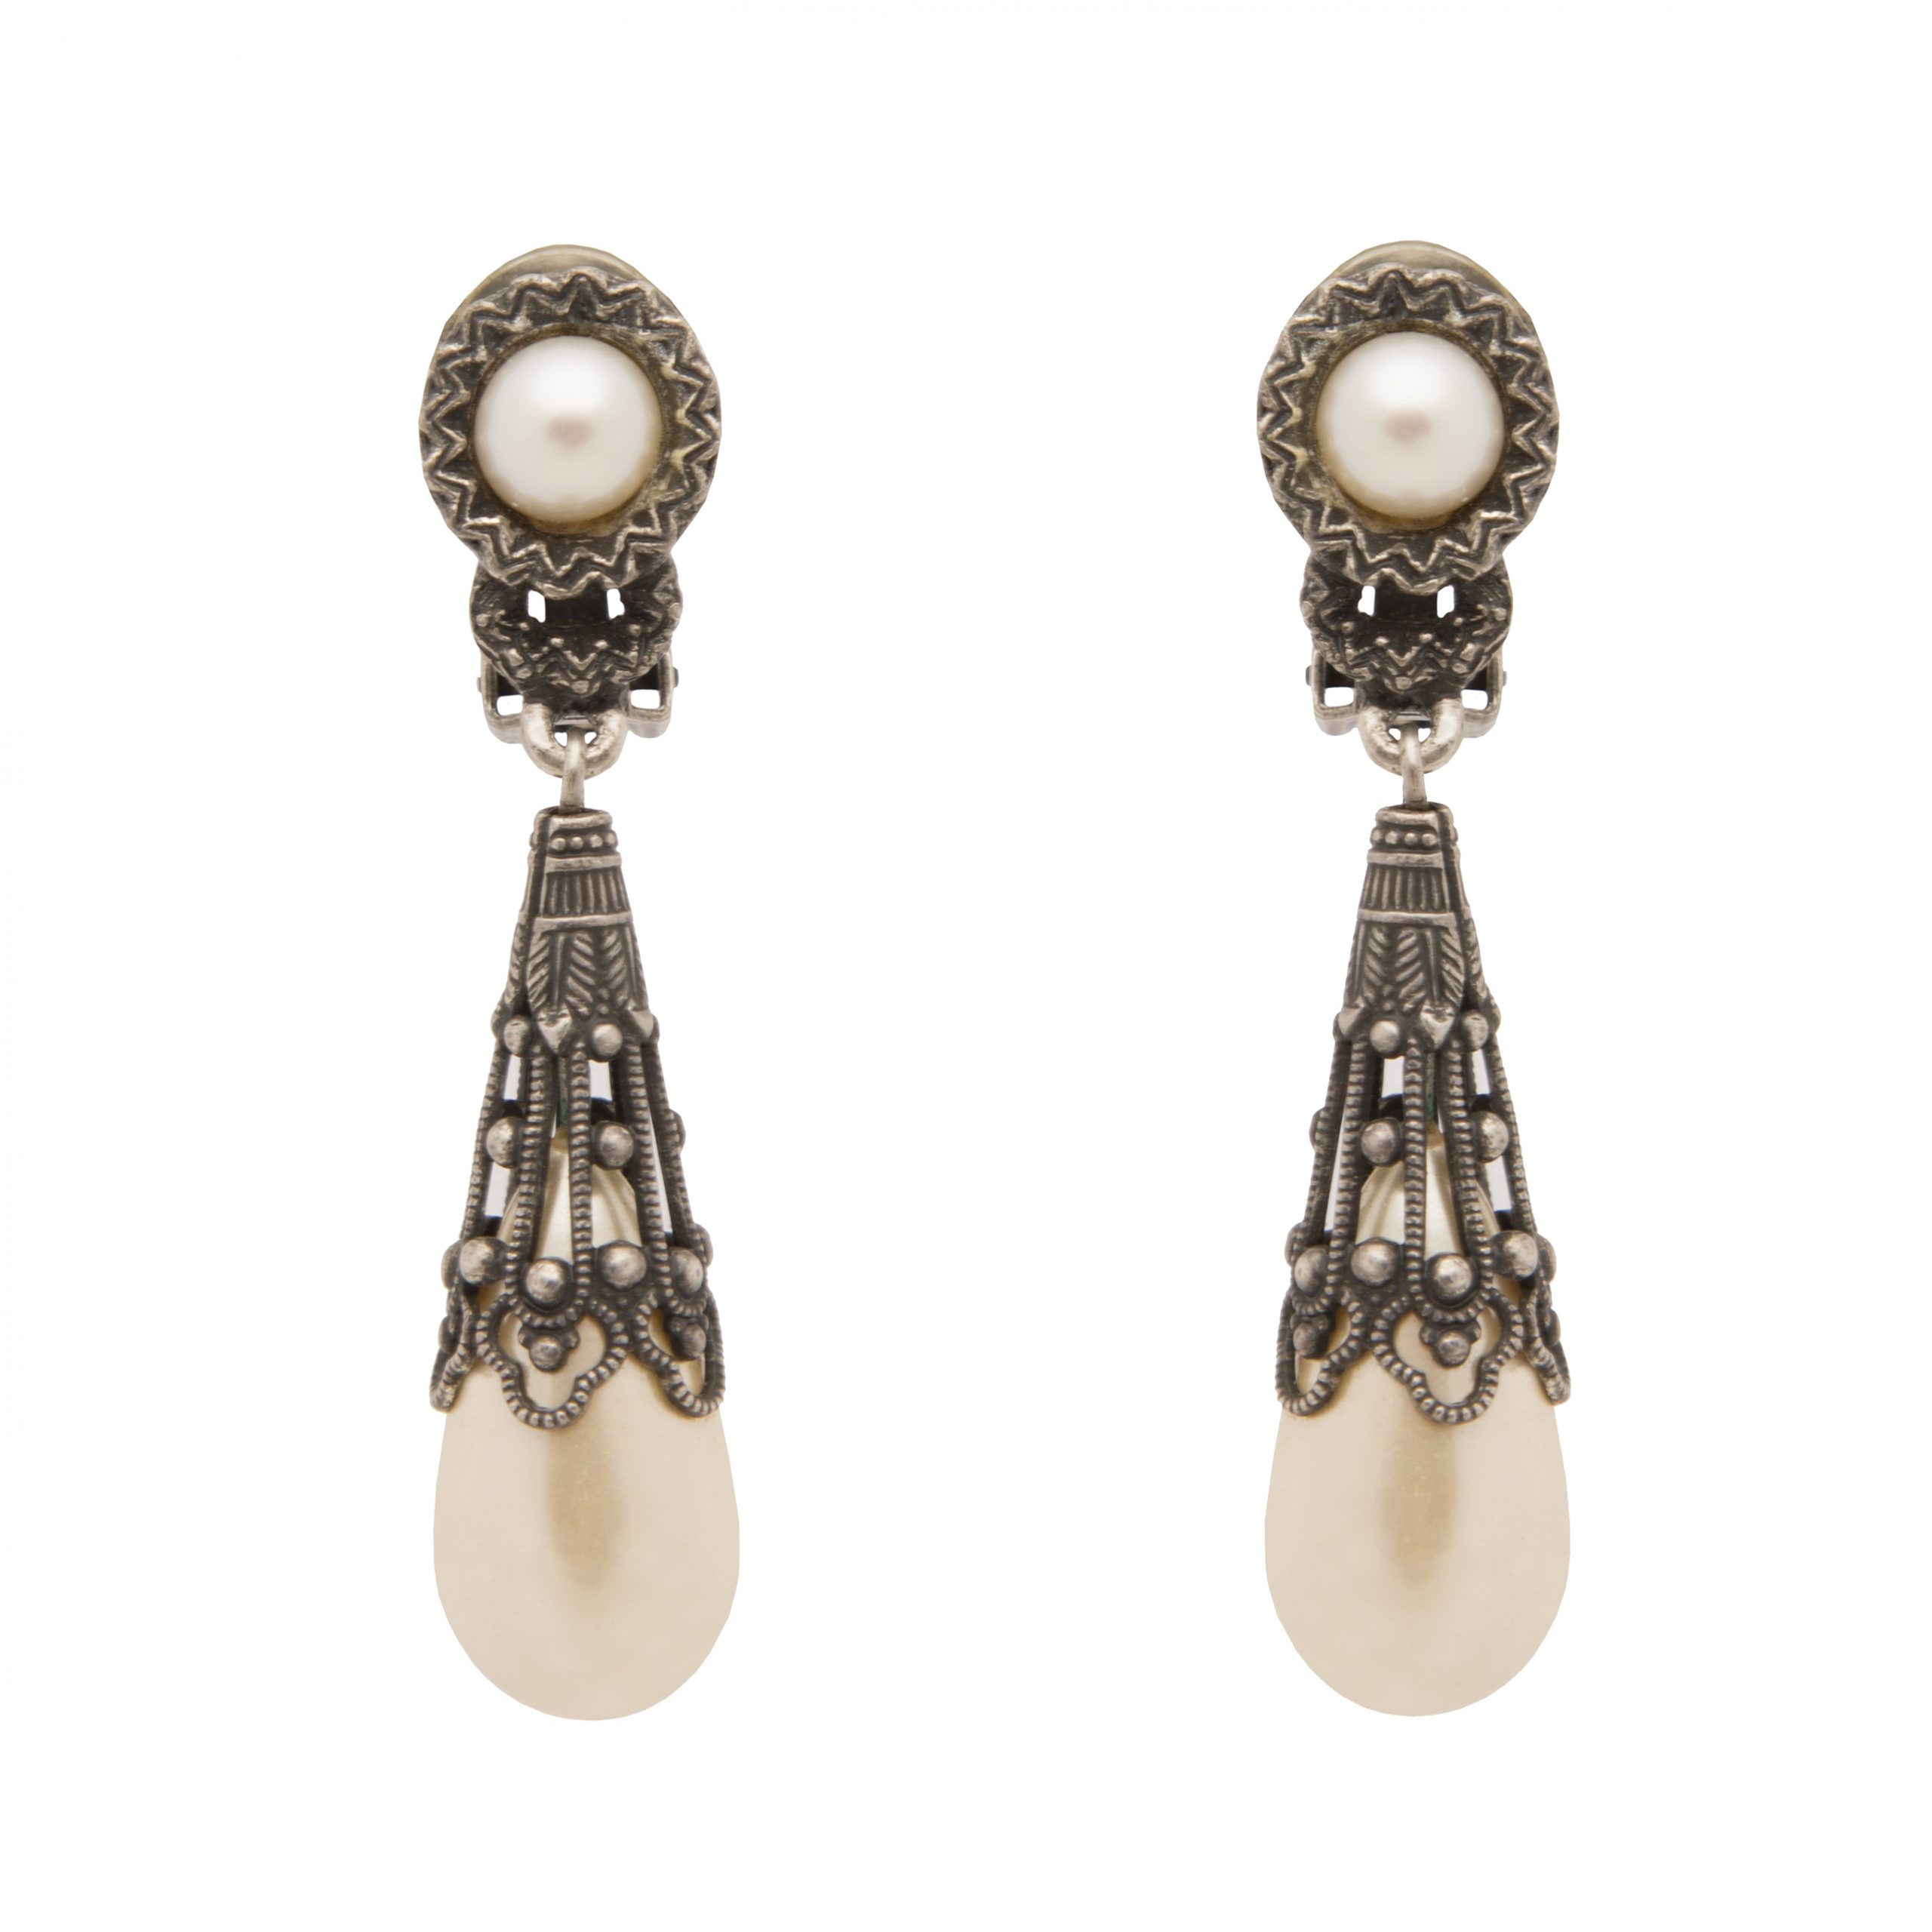 Vintage haute couture pearl drop earrings